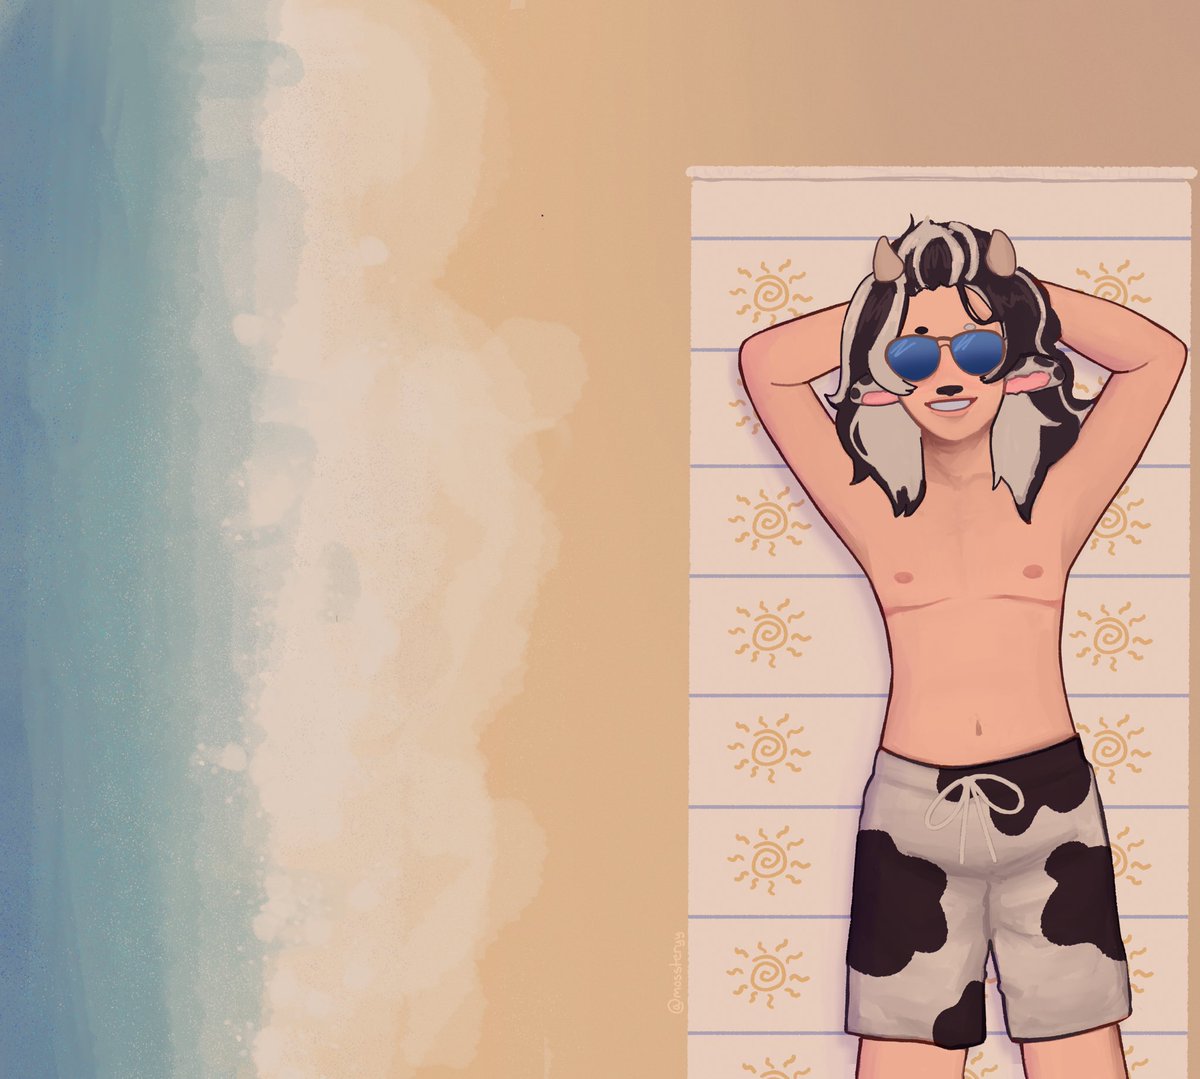 TBOY SUMMER SWAG ‼️💥🌴🌊🥥

#art #illustration #summer #beach #cow #silly #funinthesun